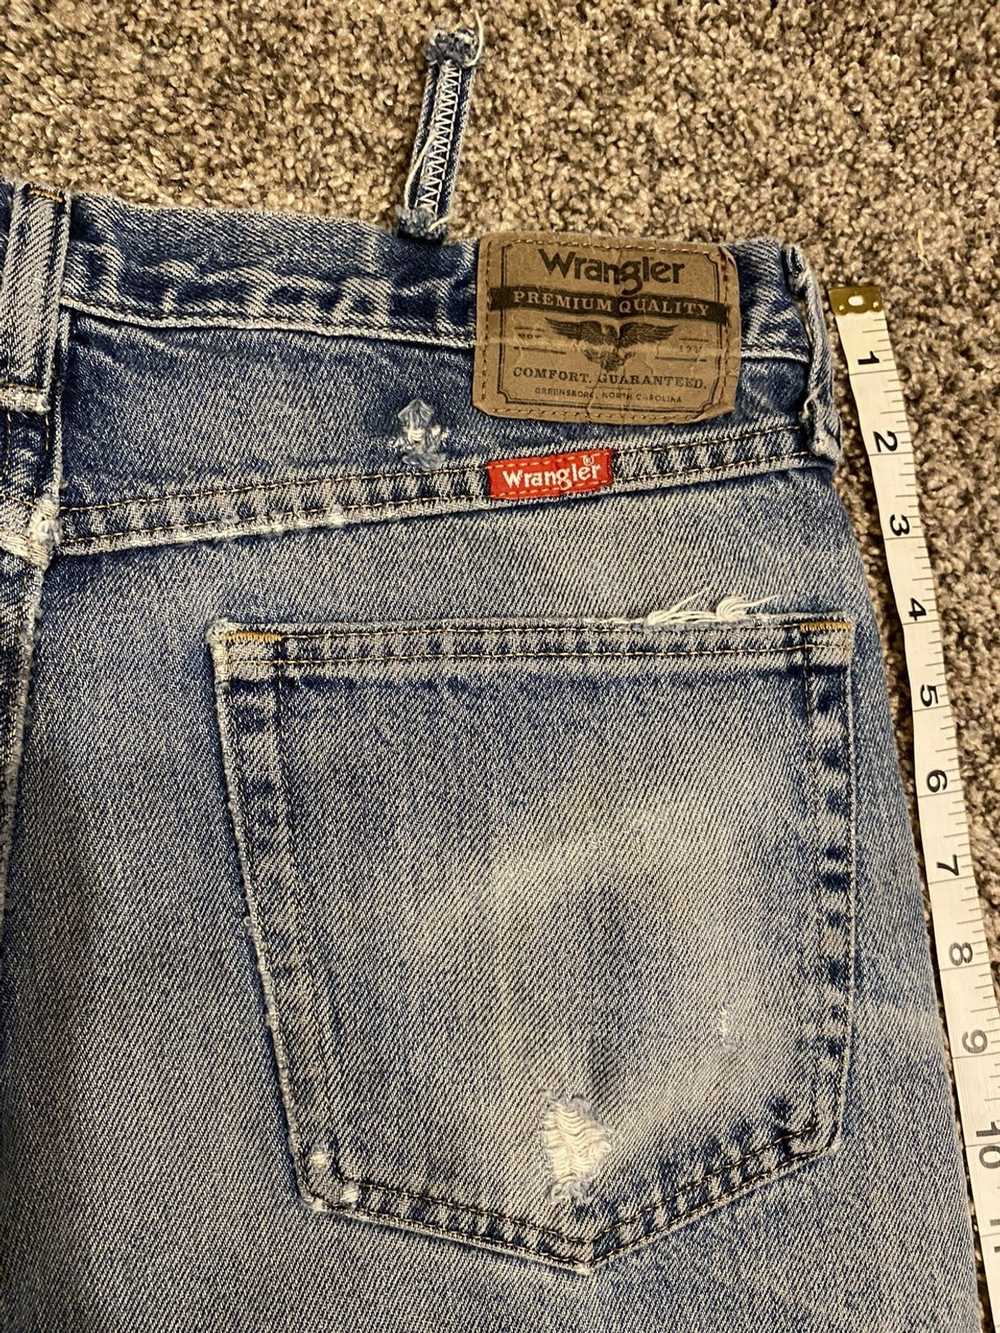 Wrangler Distressed wrangler jeans 34x32 - image 2